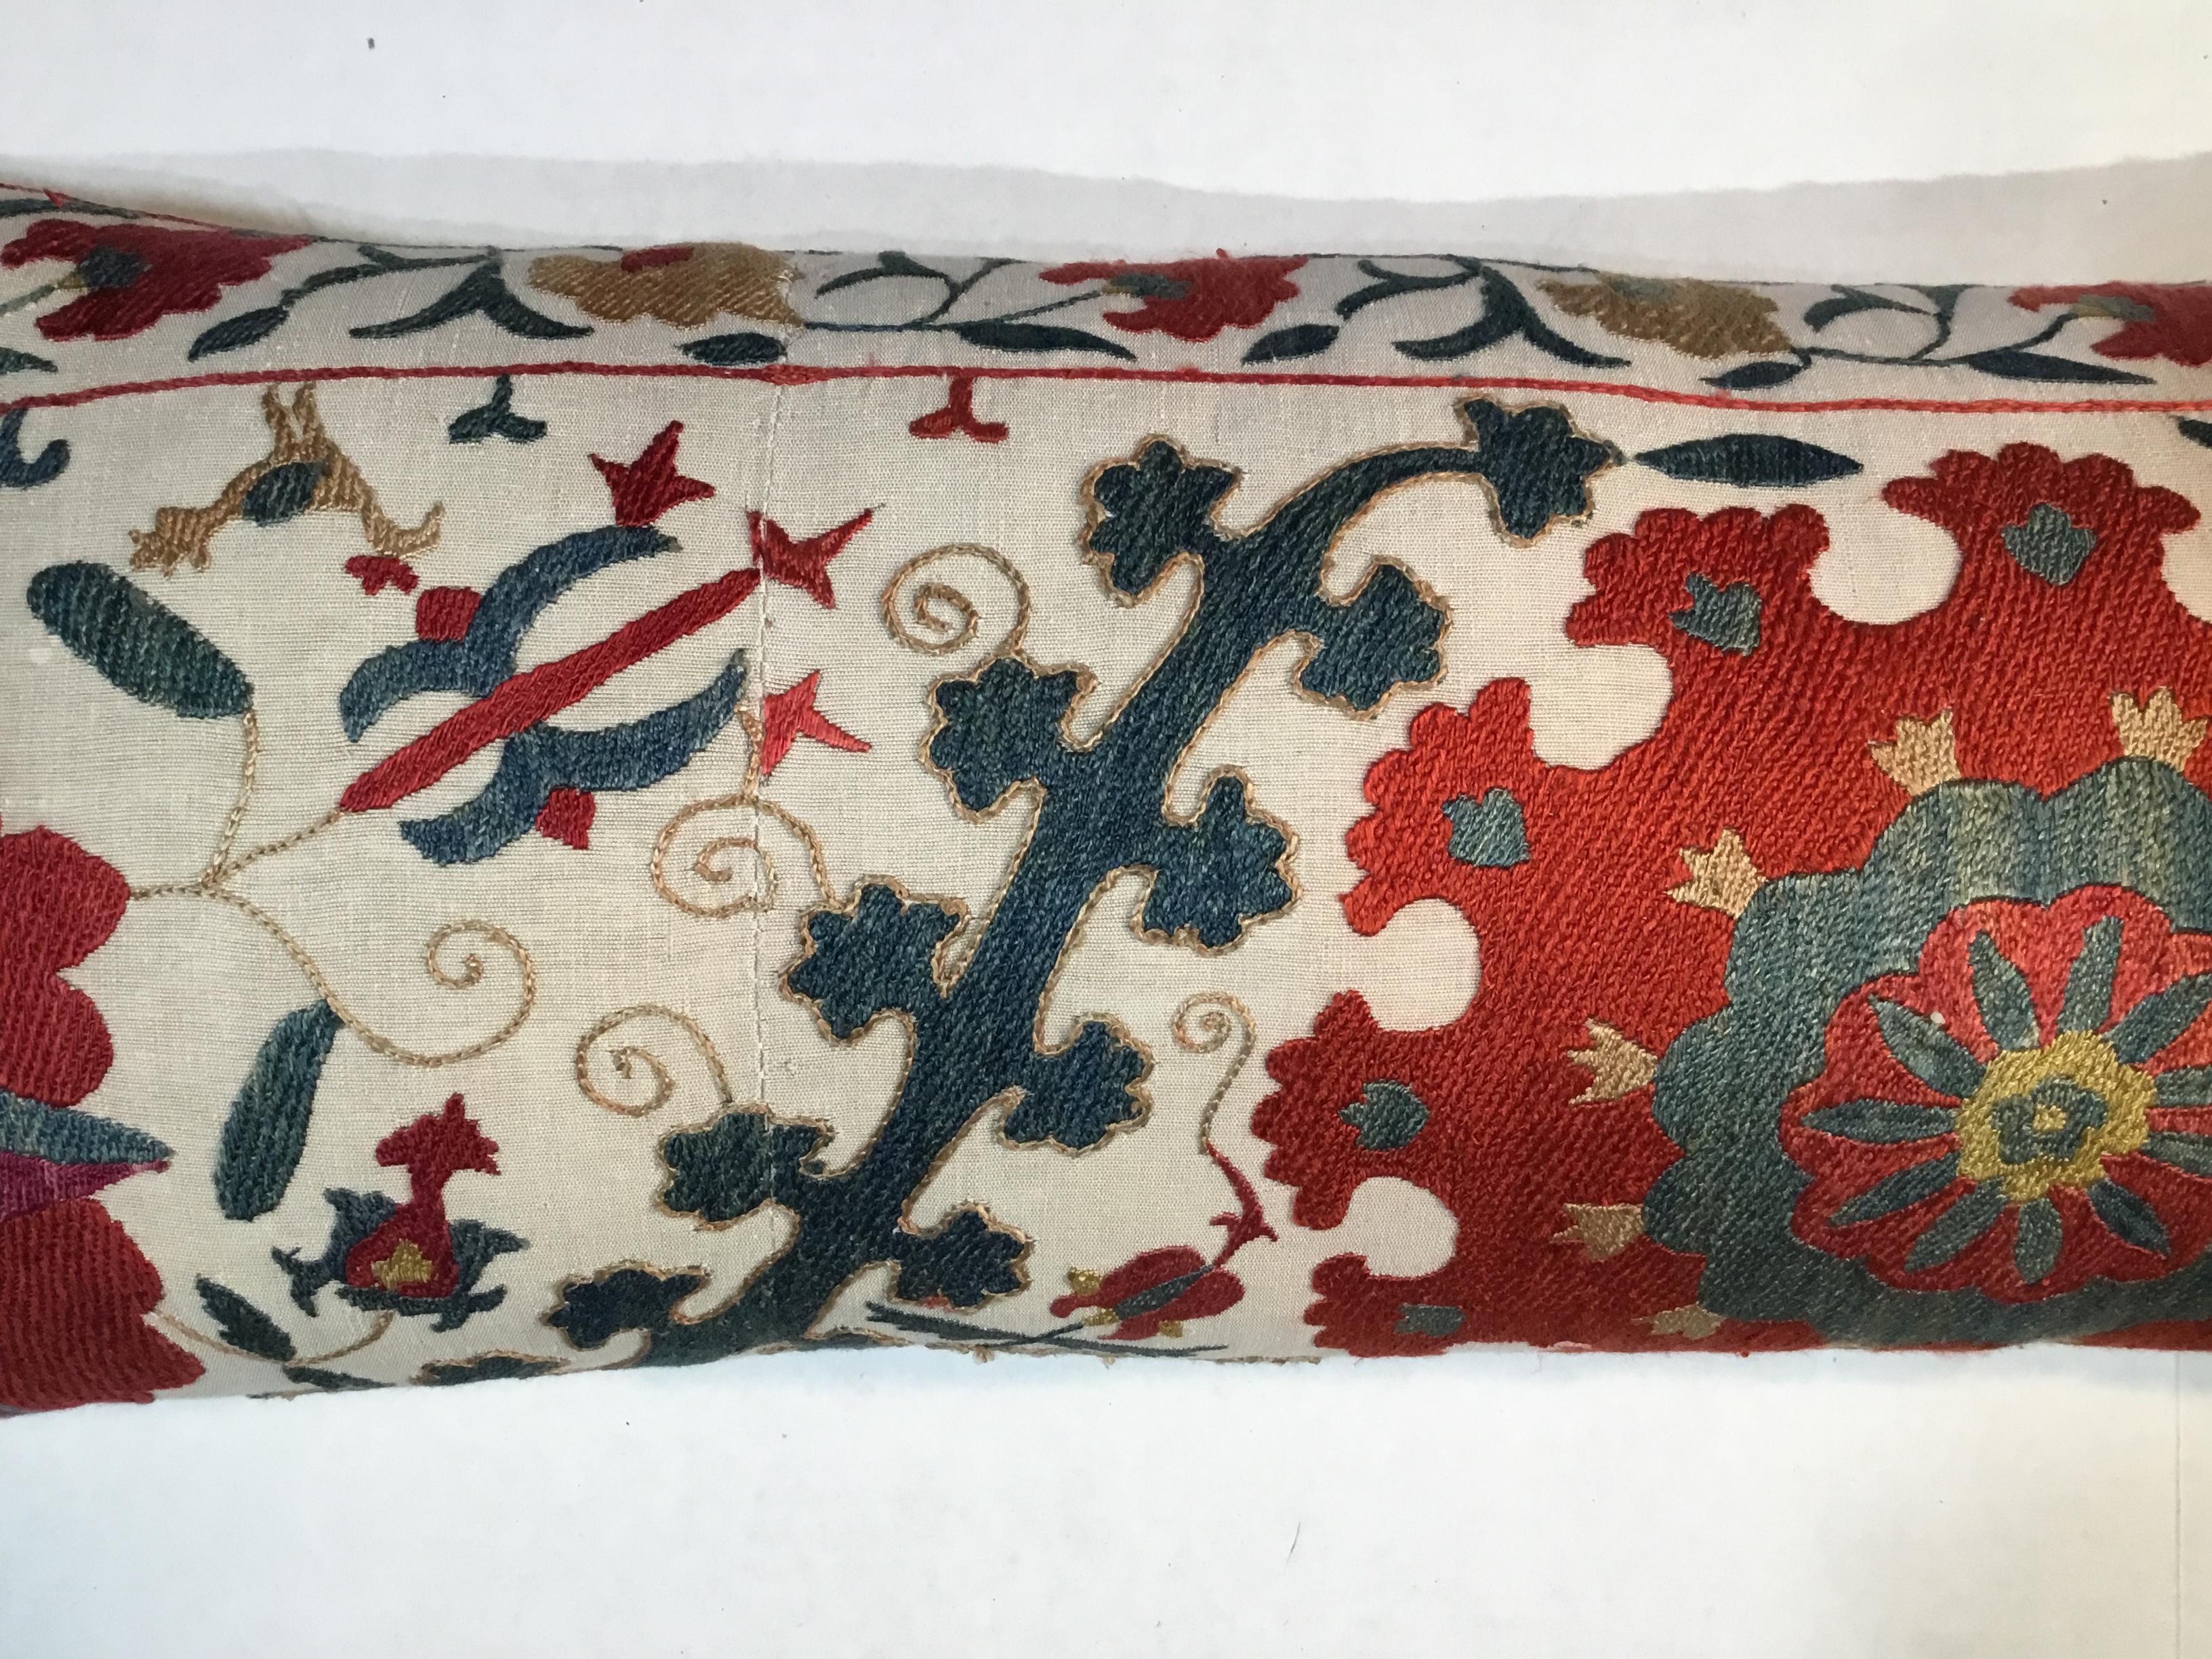 Uzbek Hand Embroidery Suzani Pillow